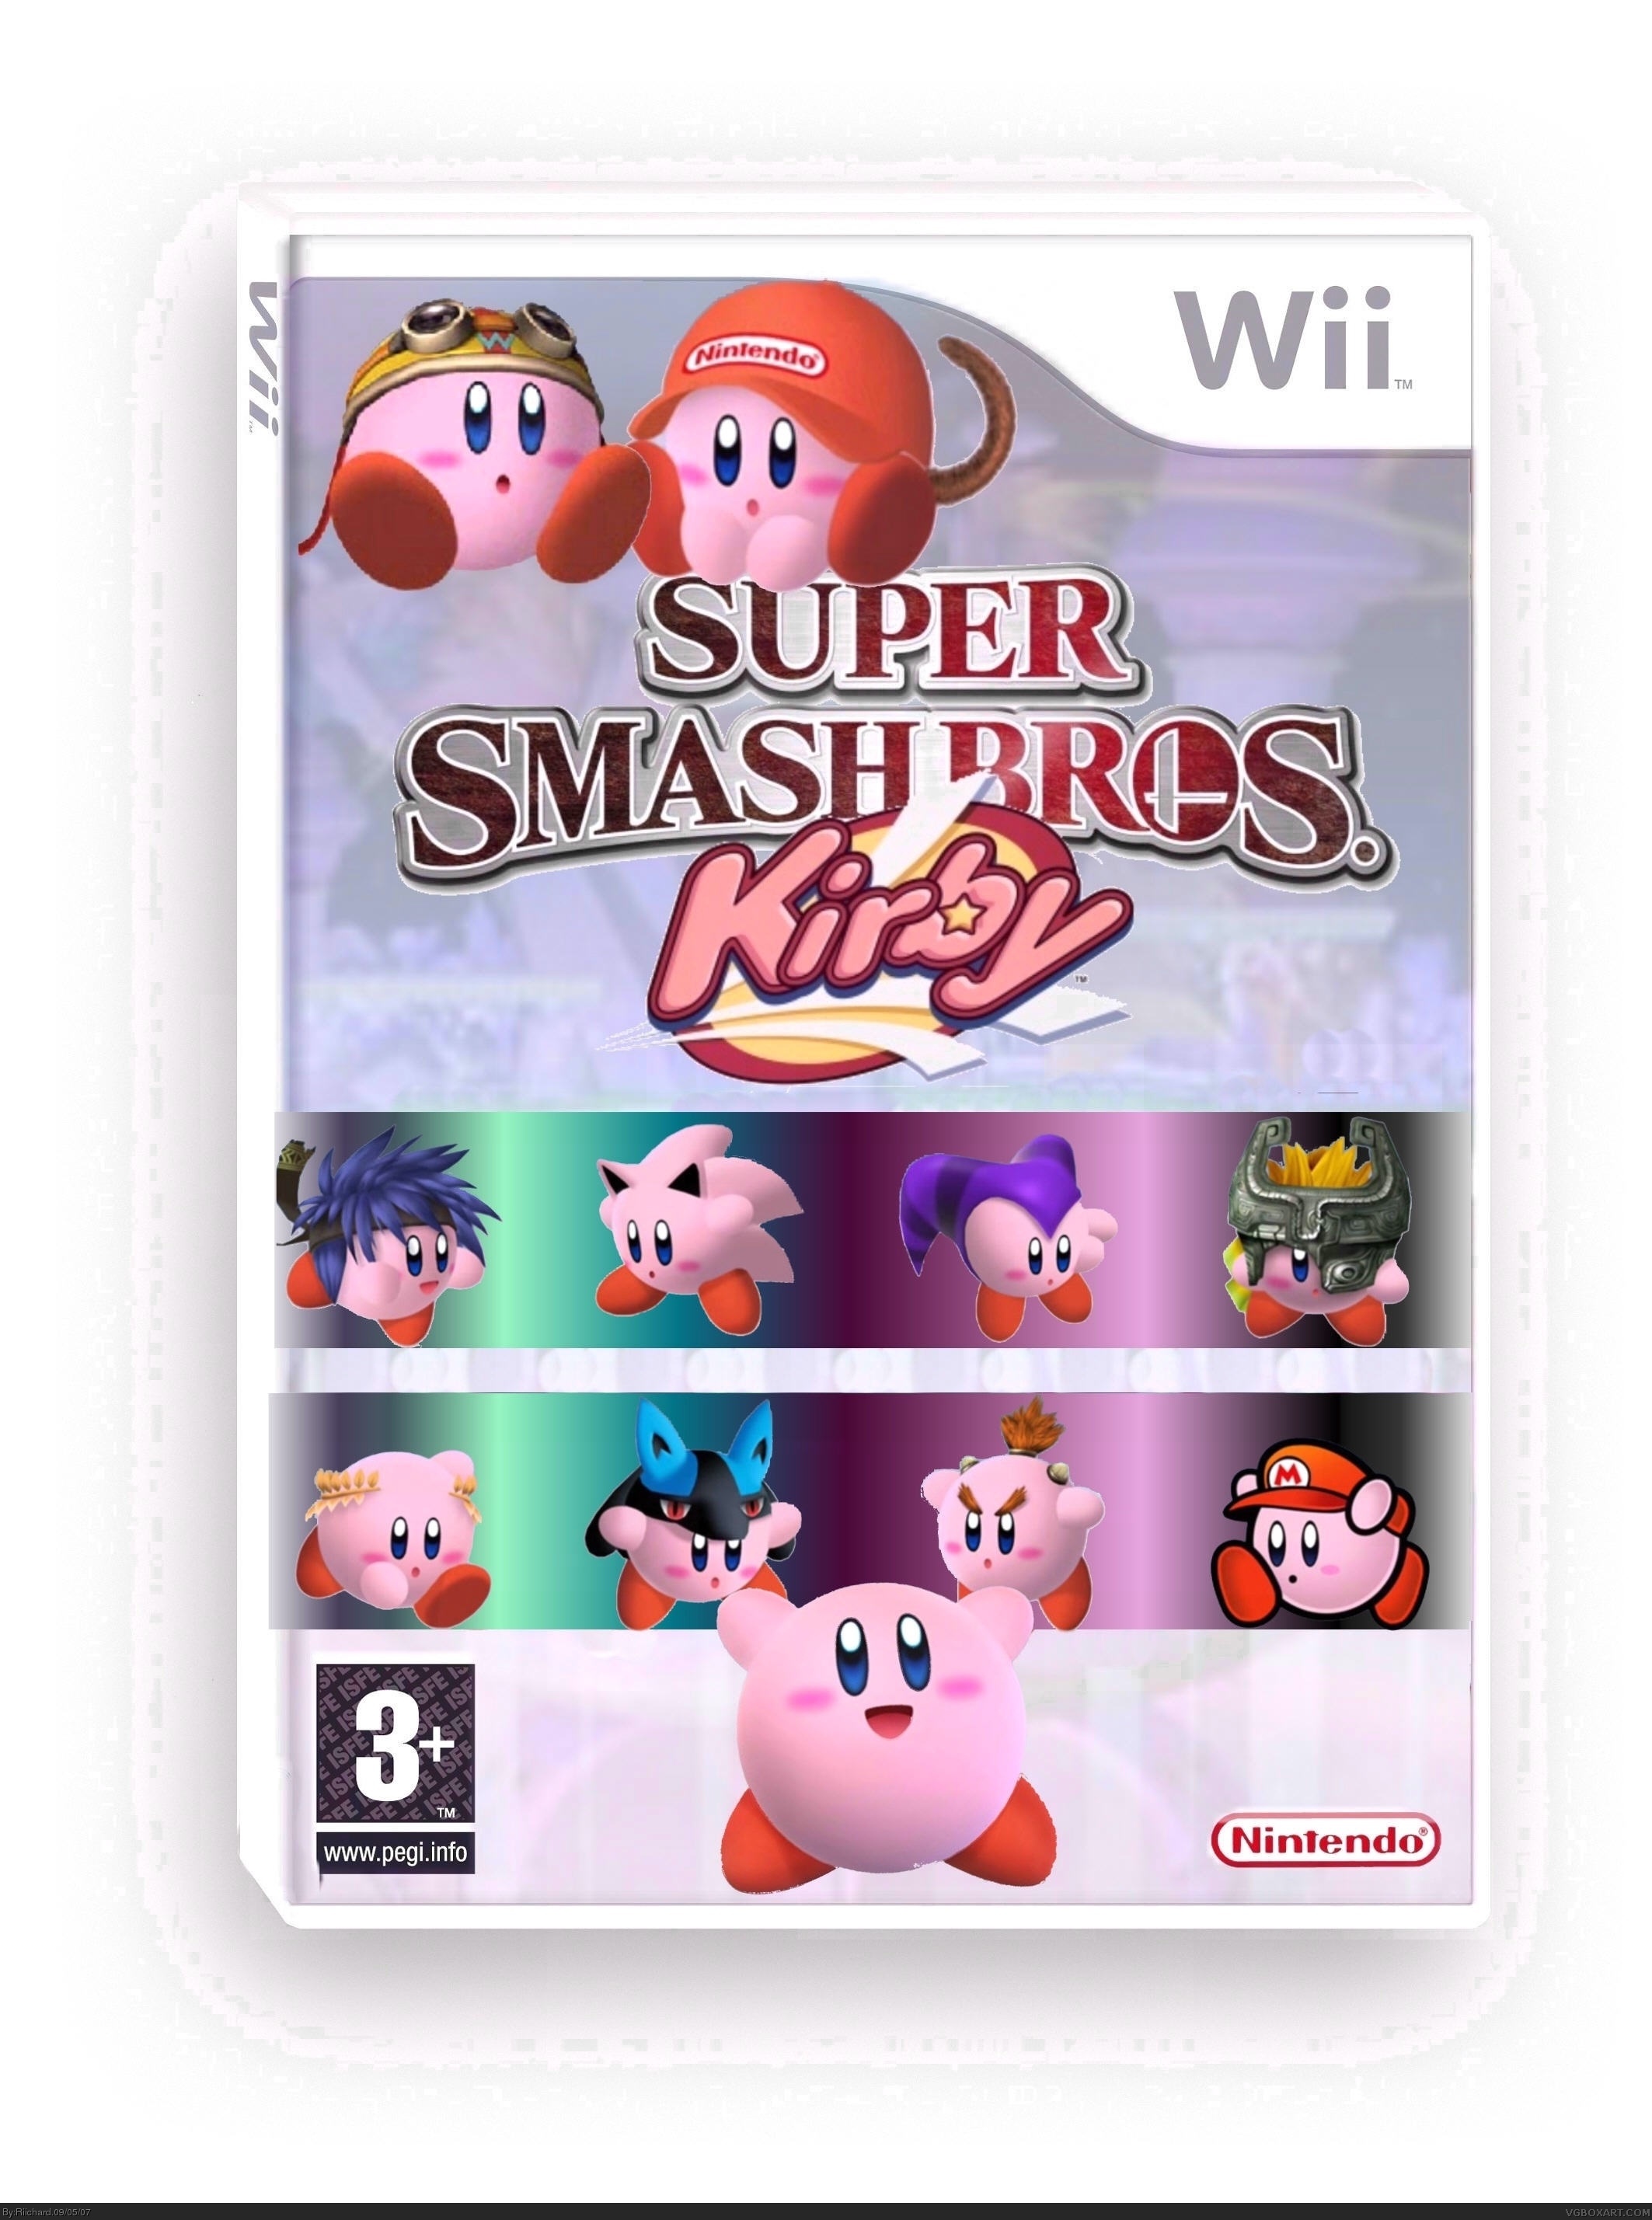 Super Smash Bros. Kirby! box cover